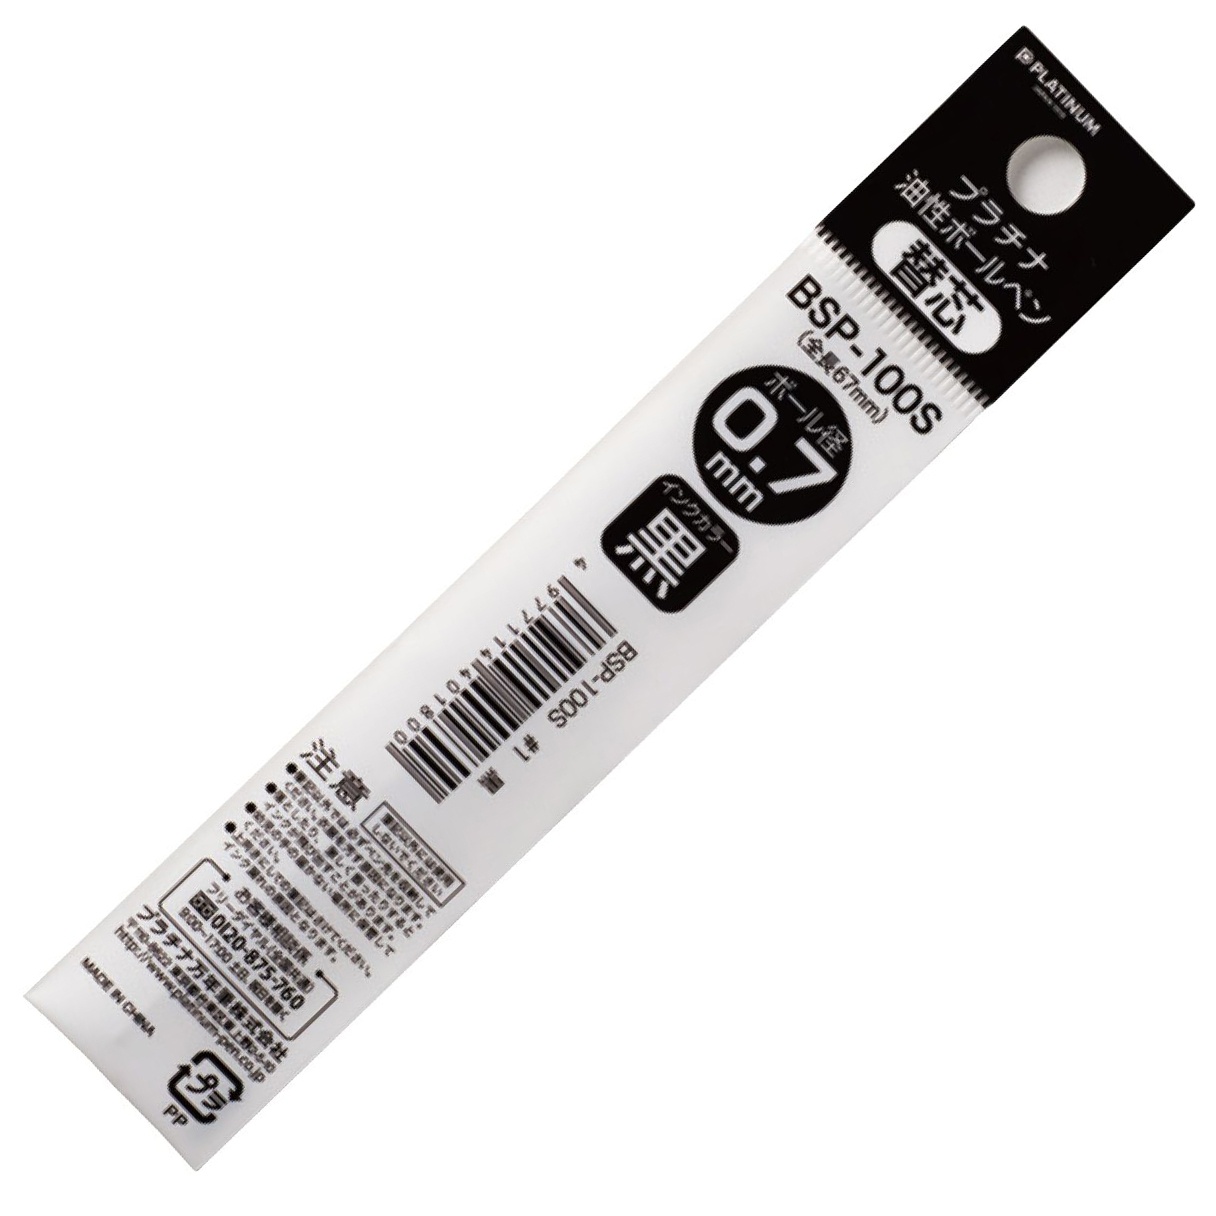 BSP-100S Ballpoint pen refill in the group Pens / Pen Accessories / Cartridges & Refills at Pen Store (109863_r)